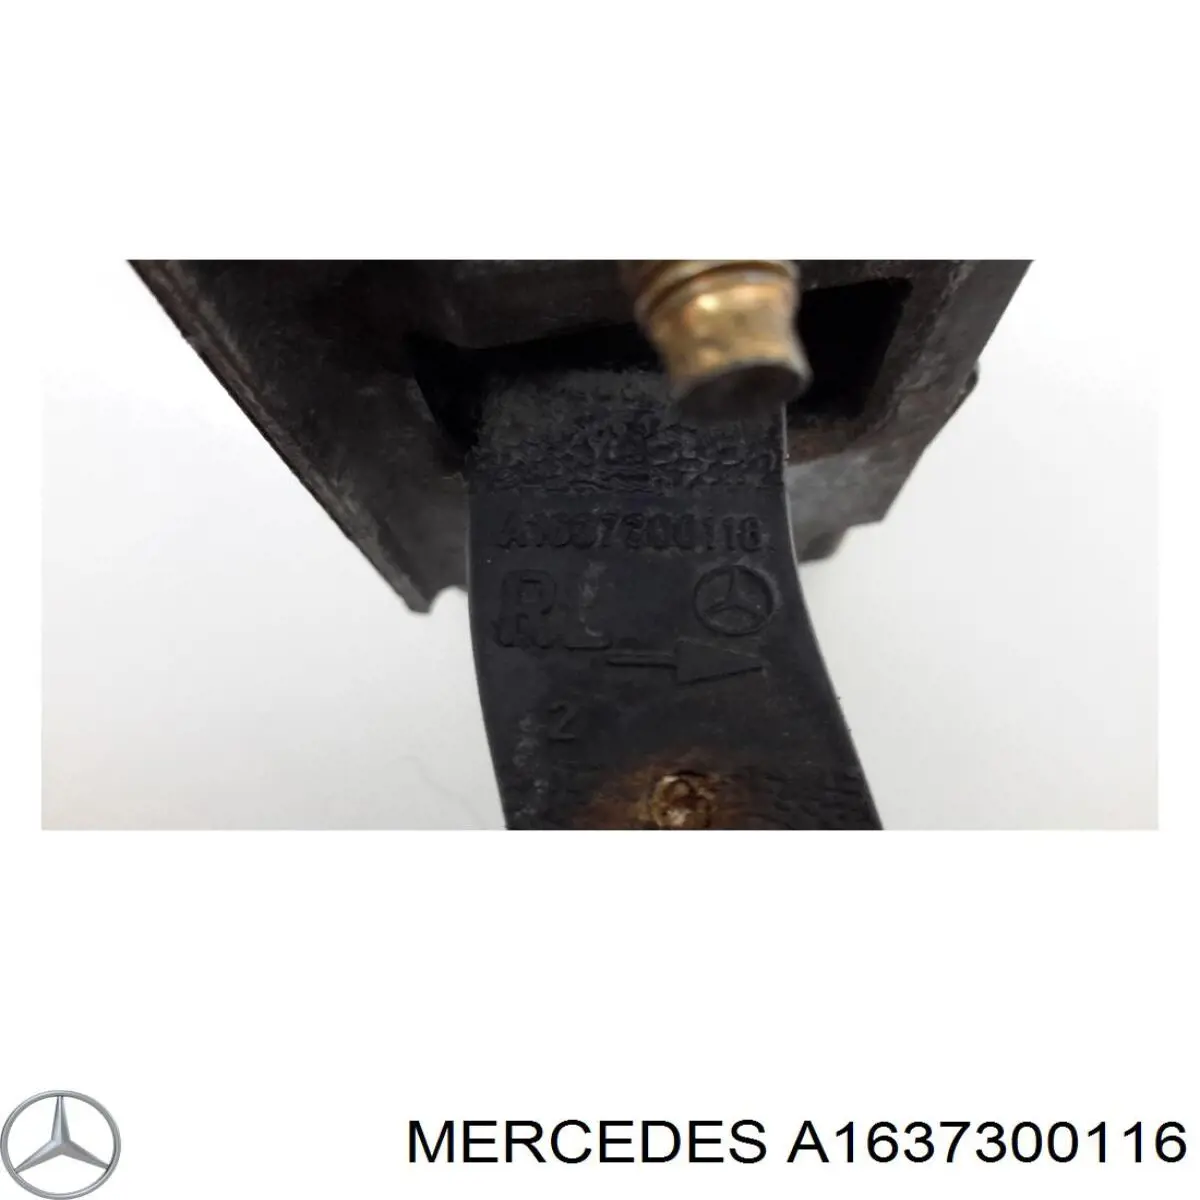 Tope de puerta trasera para Mercedes ML/GLE (W163)